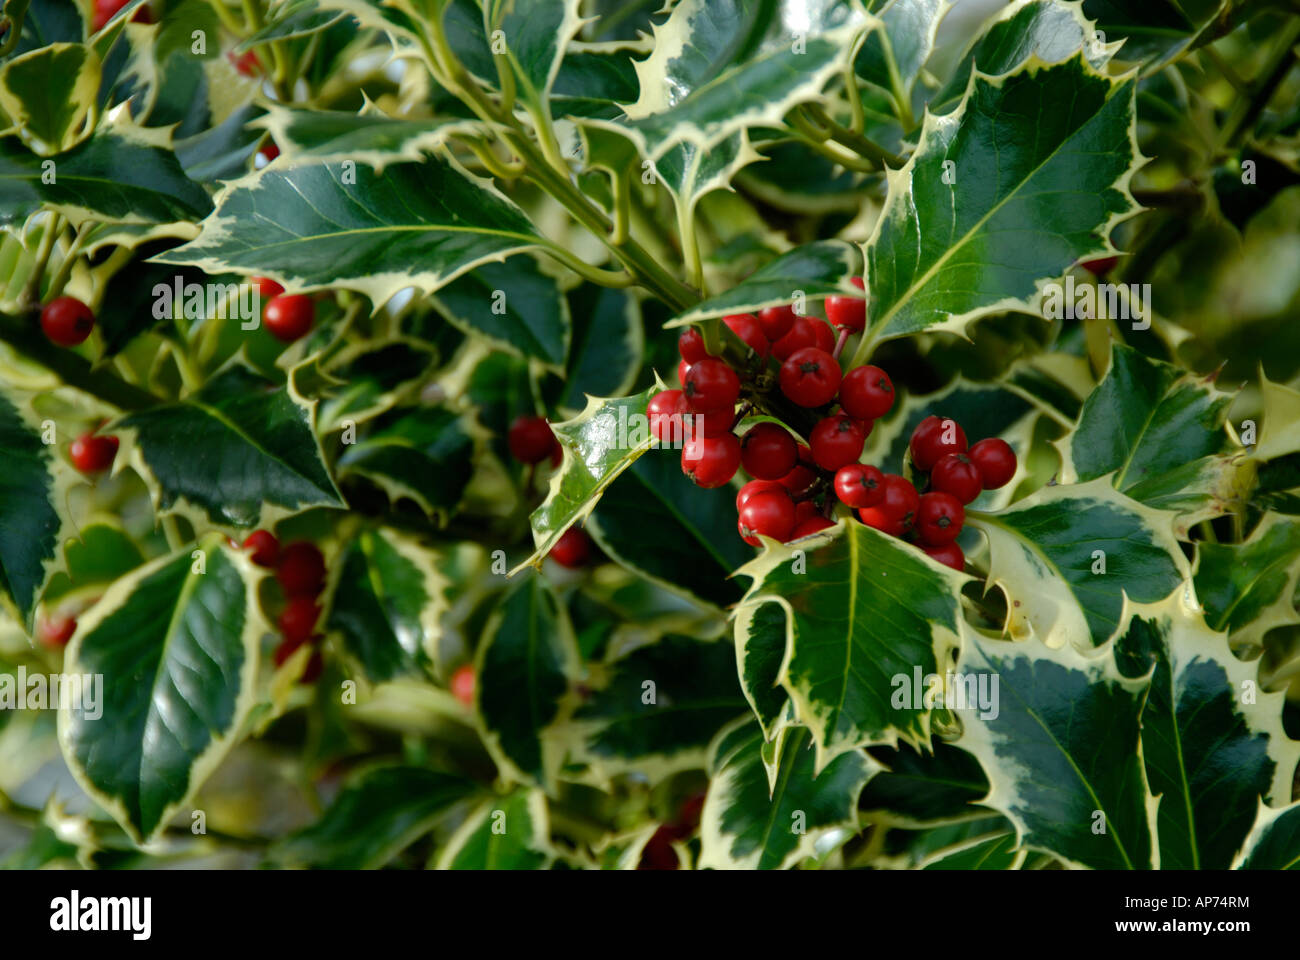 Varigated holly (ilex aquifolium) with red berries. Stock Photo